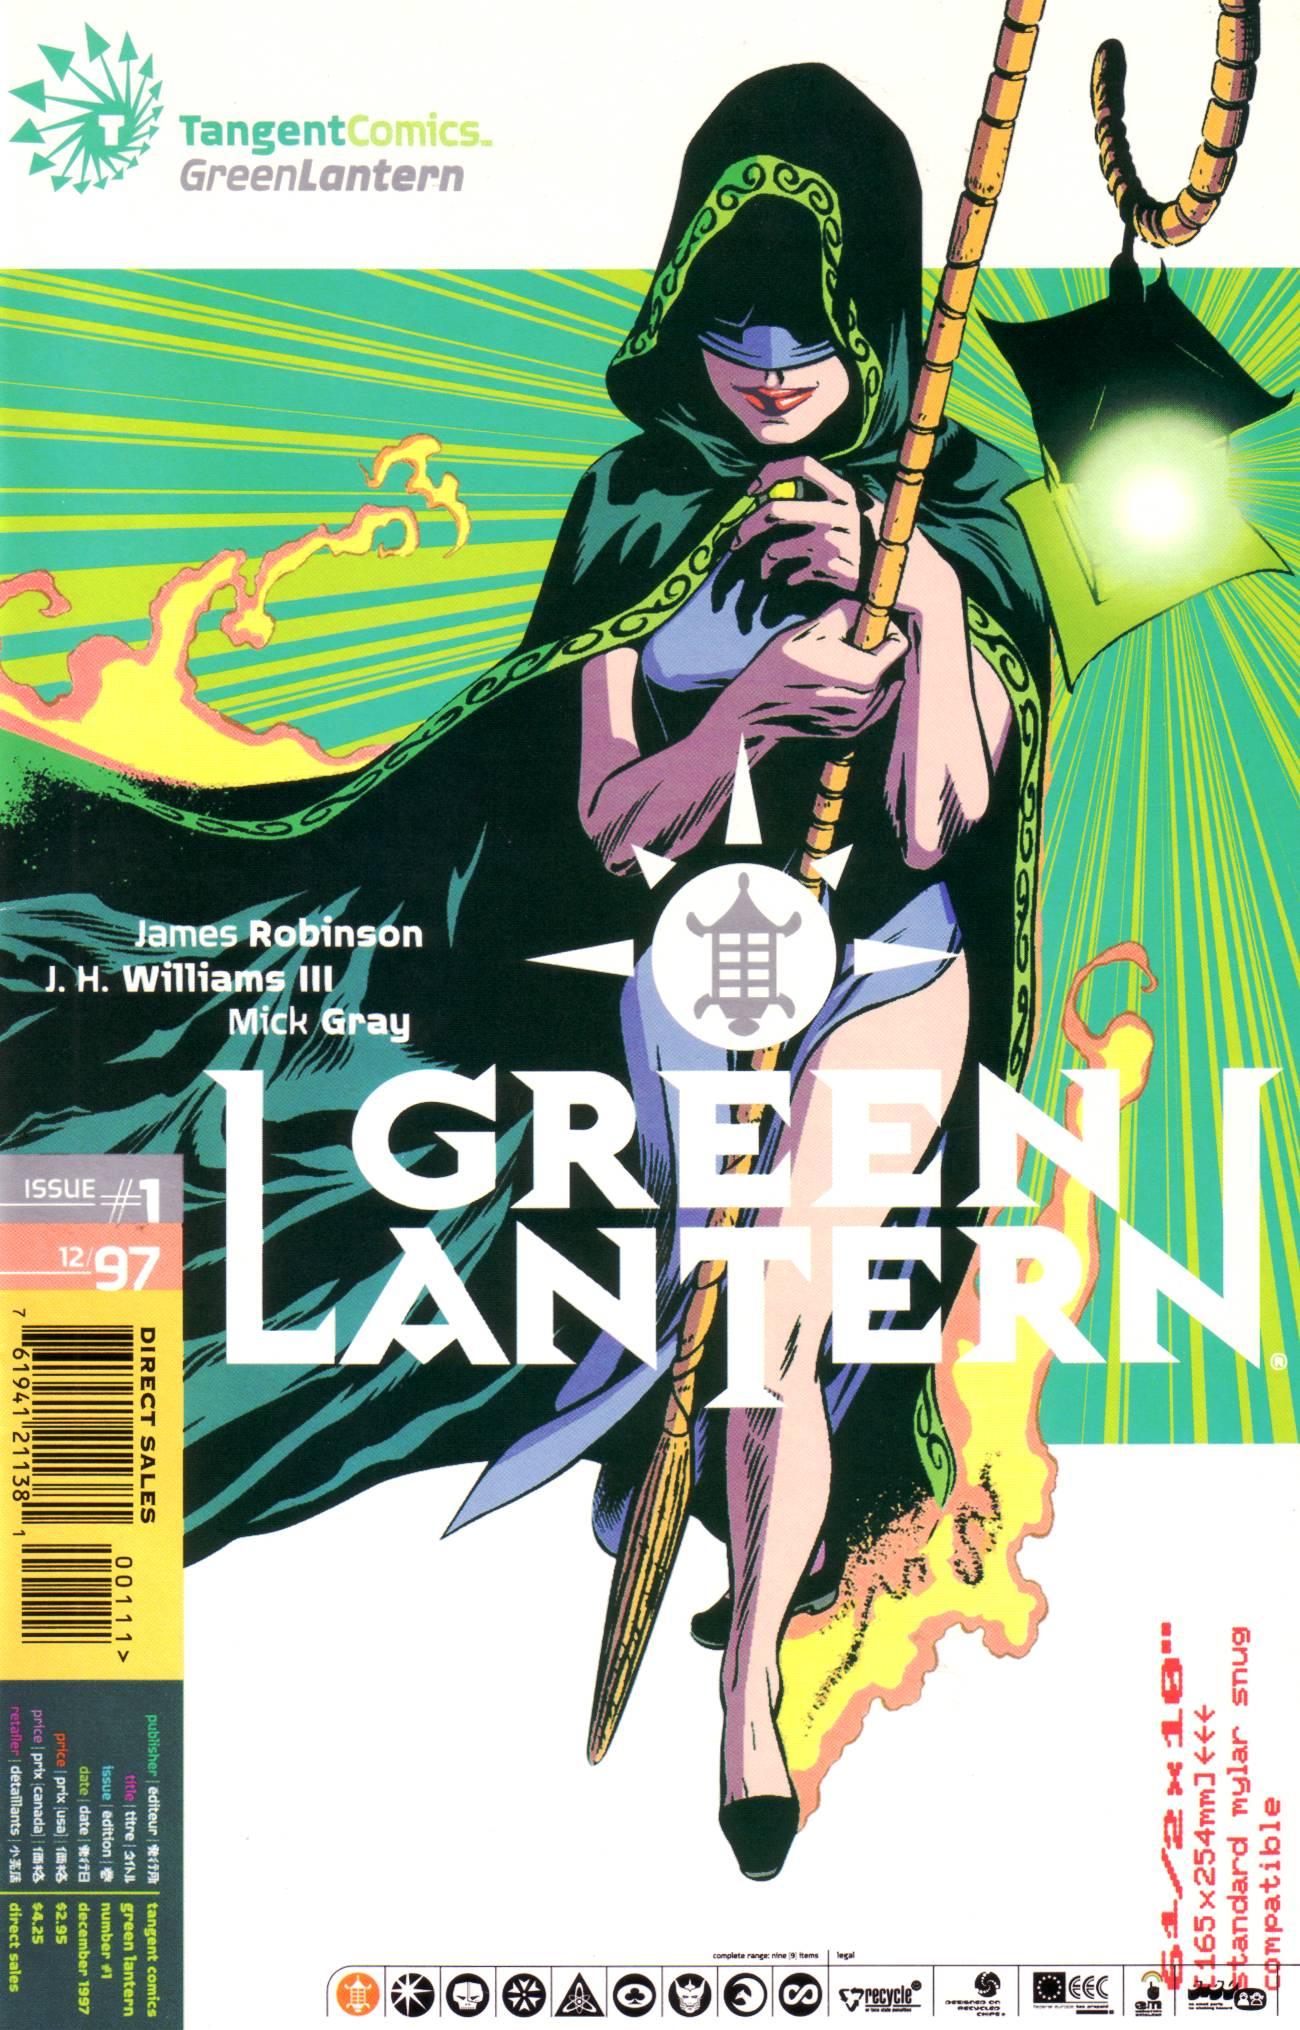 Tangent Comics: Green Lantern Vol. 1 #1